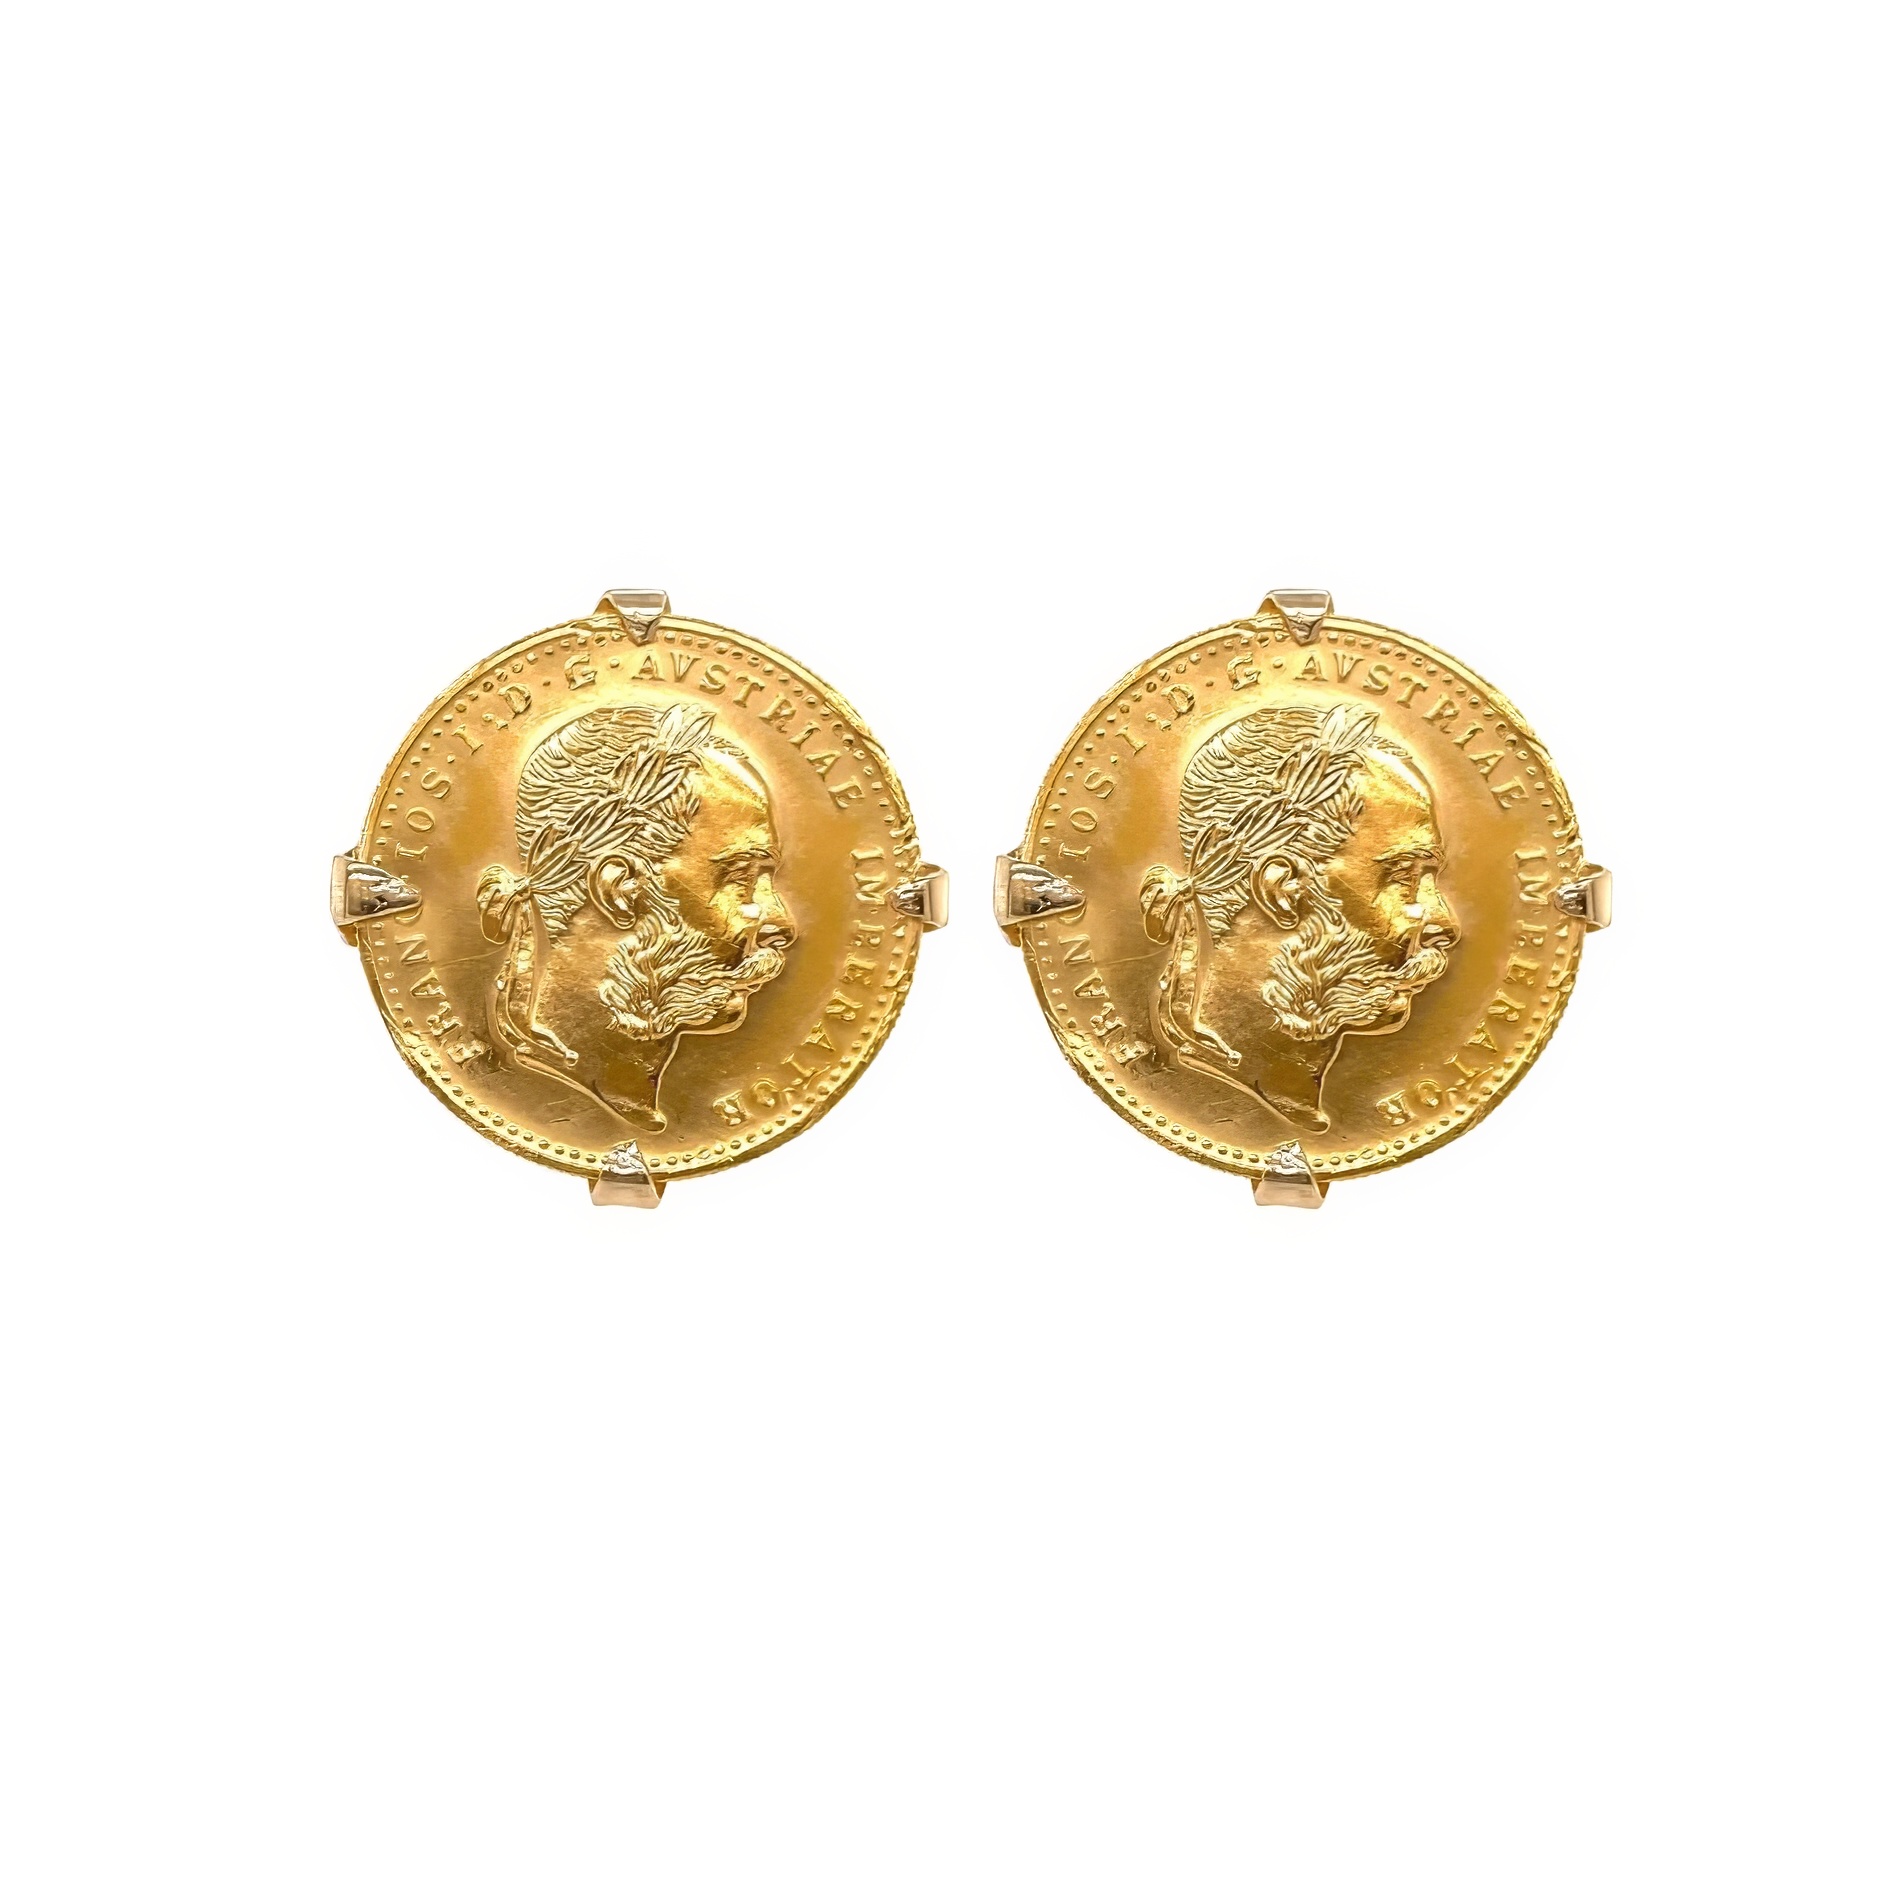 Antique Austrian Gold Coin Cufflinks | $1,250 CDB Jewelry